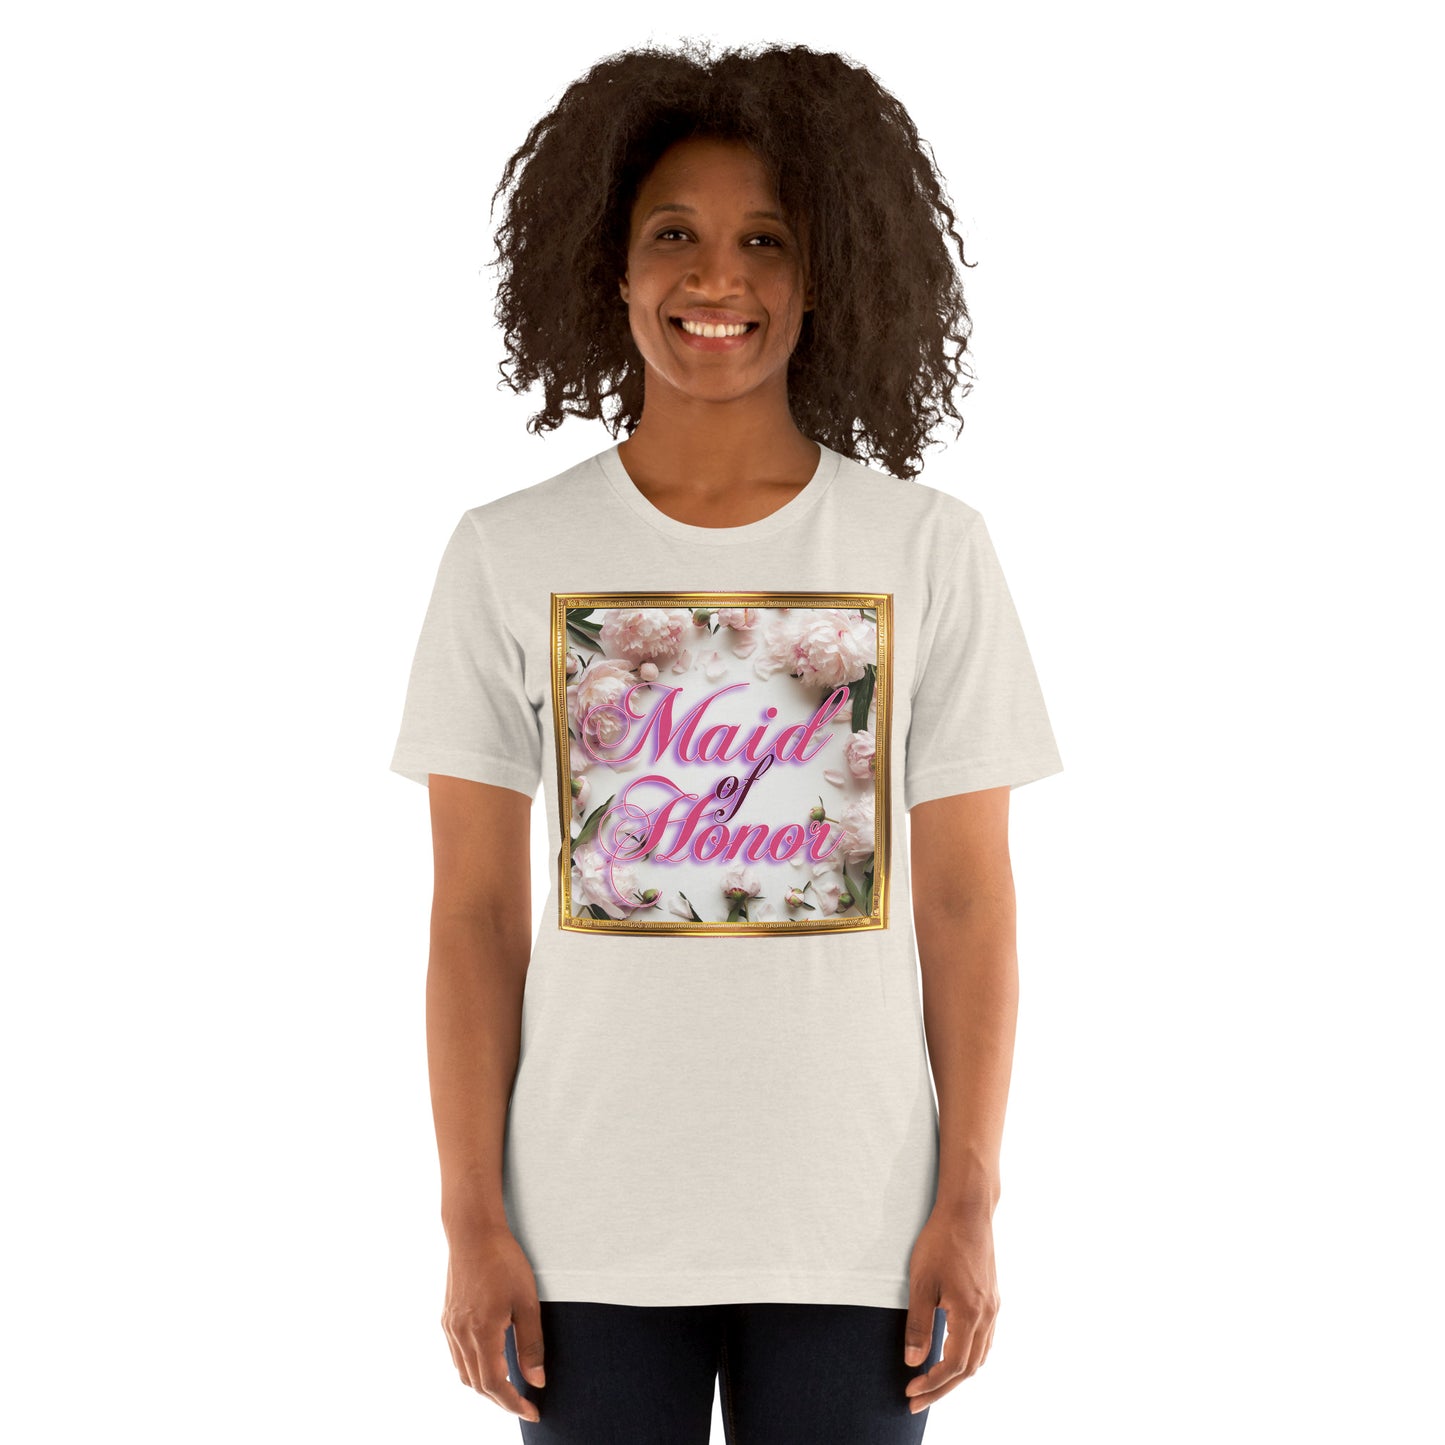 Maid of Honor Unisex t-shirt